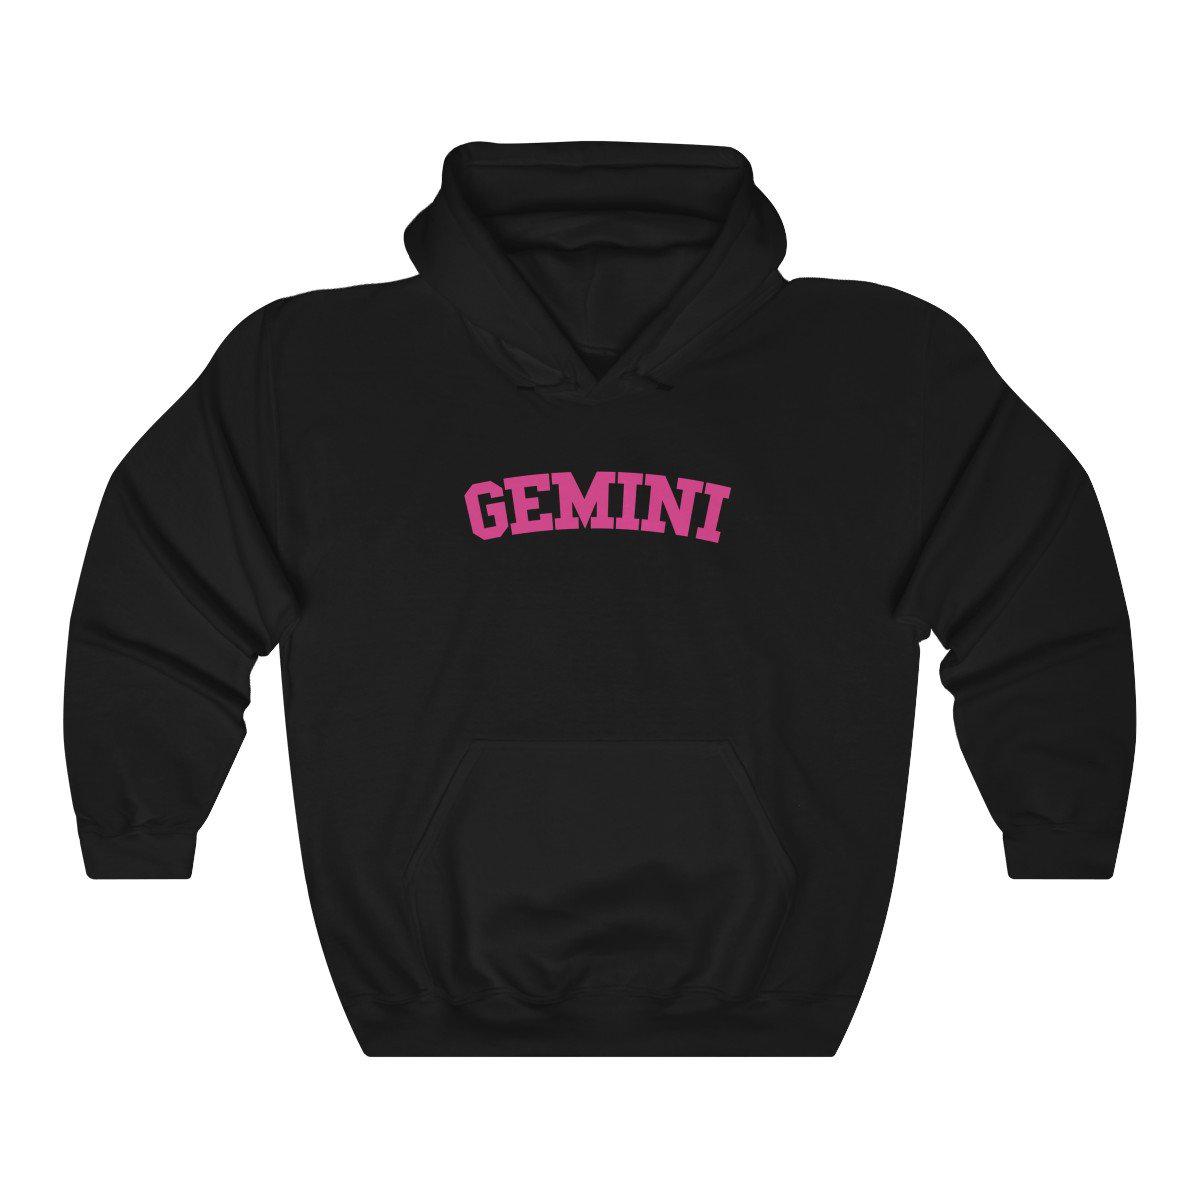 Gemini Collegiate Hoodie